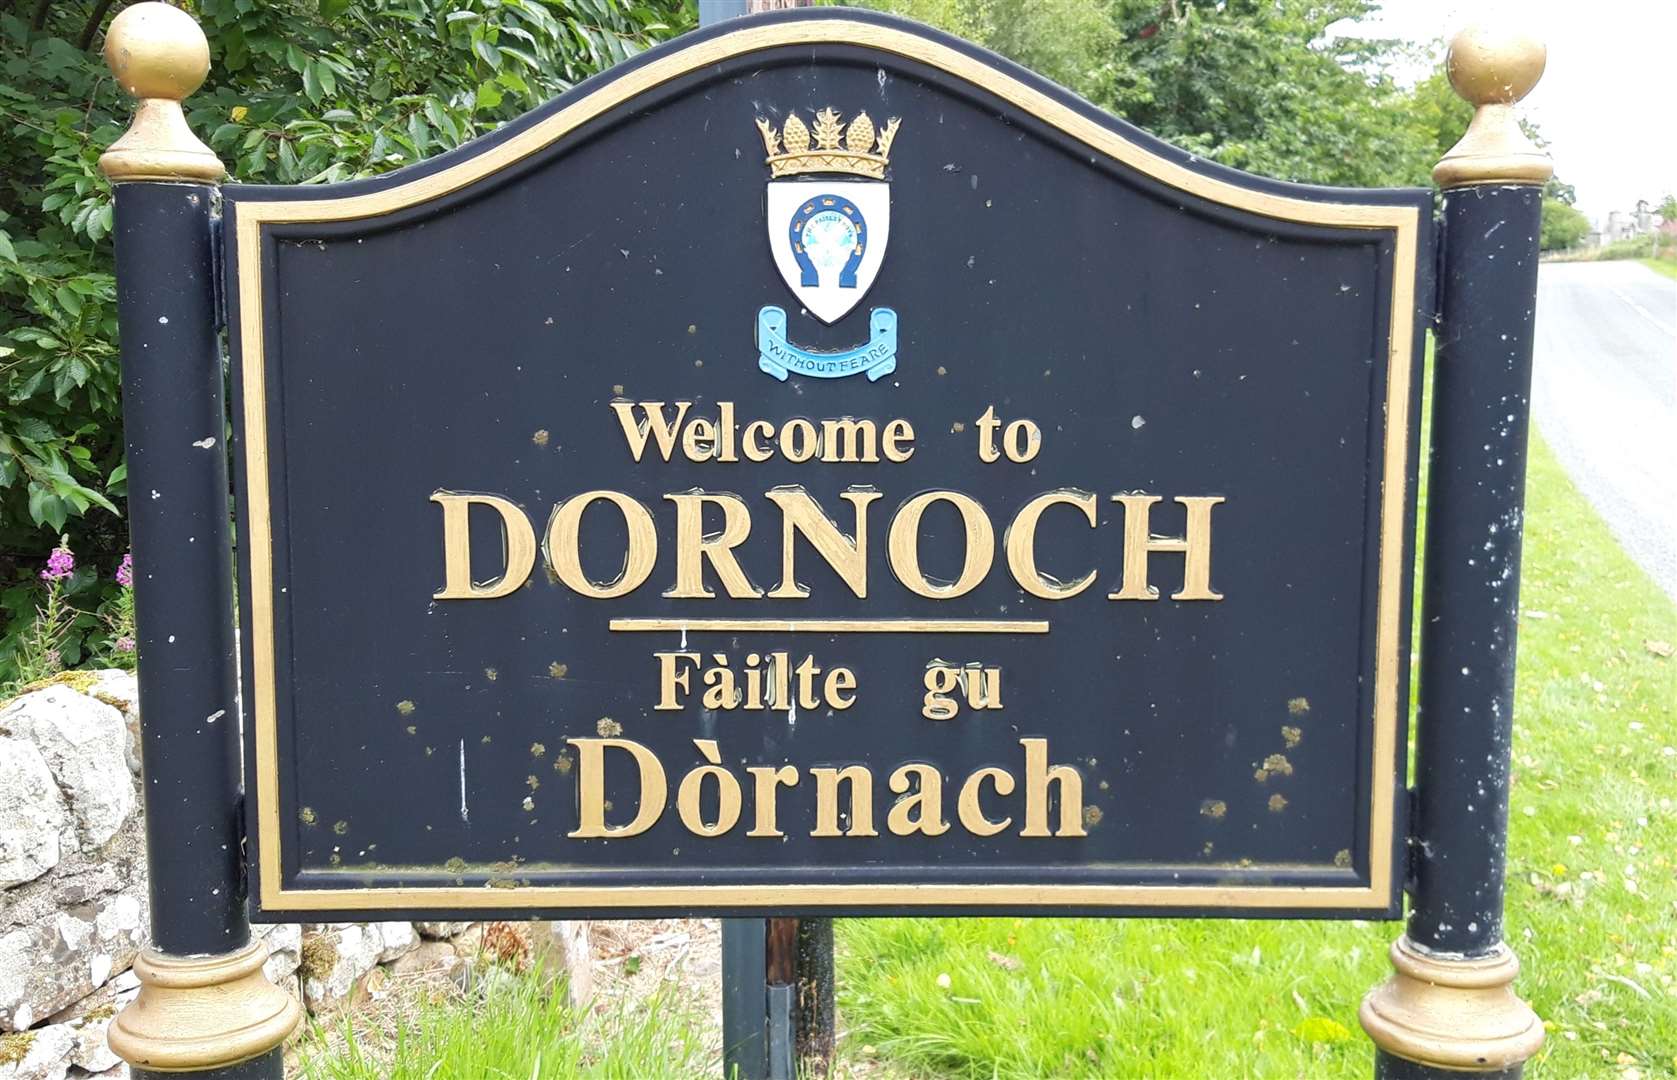 If a Dornoch BID is established, it will market Dornoch as a year-round destination.